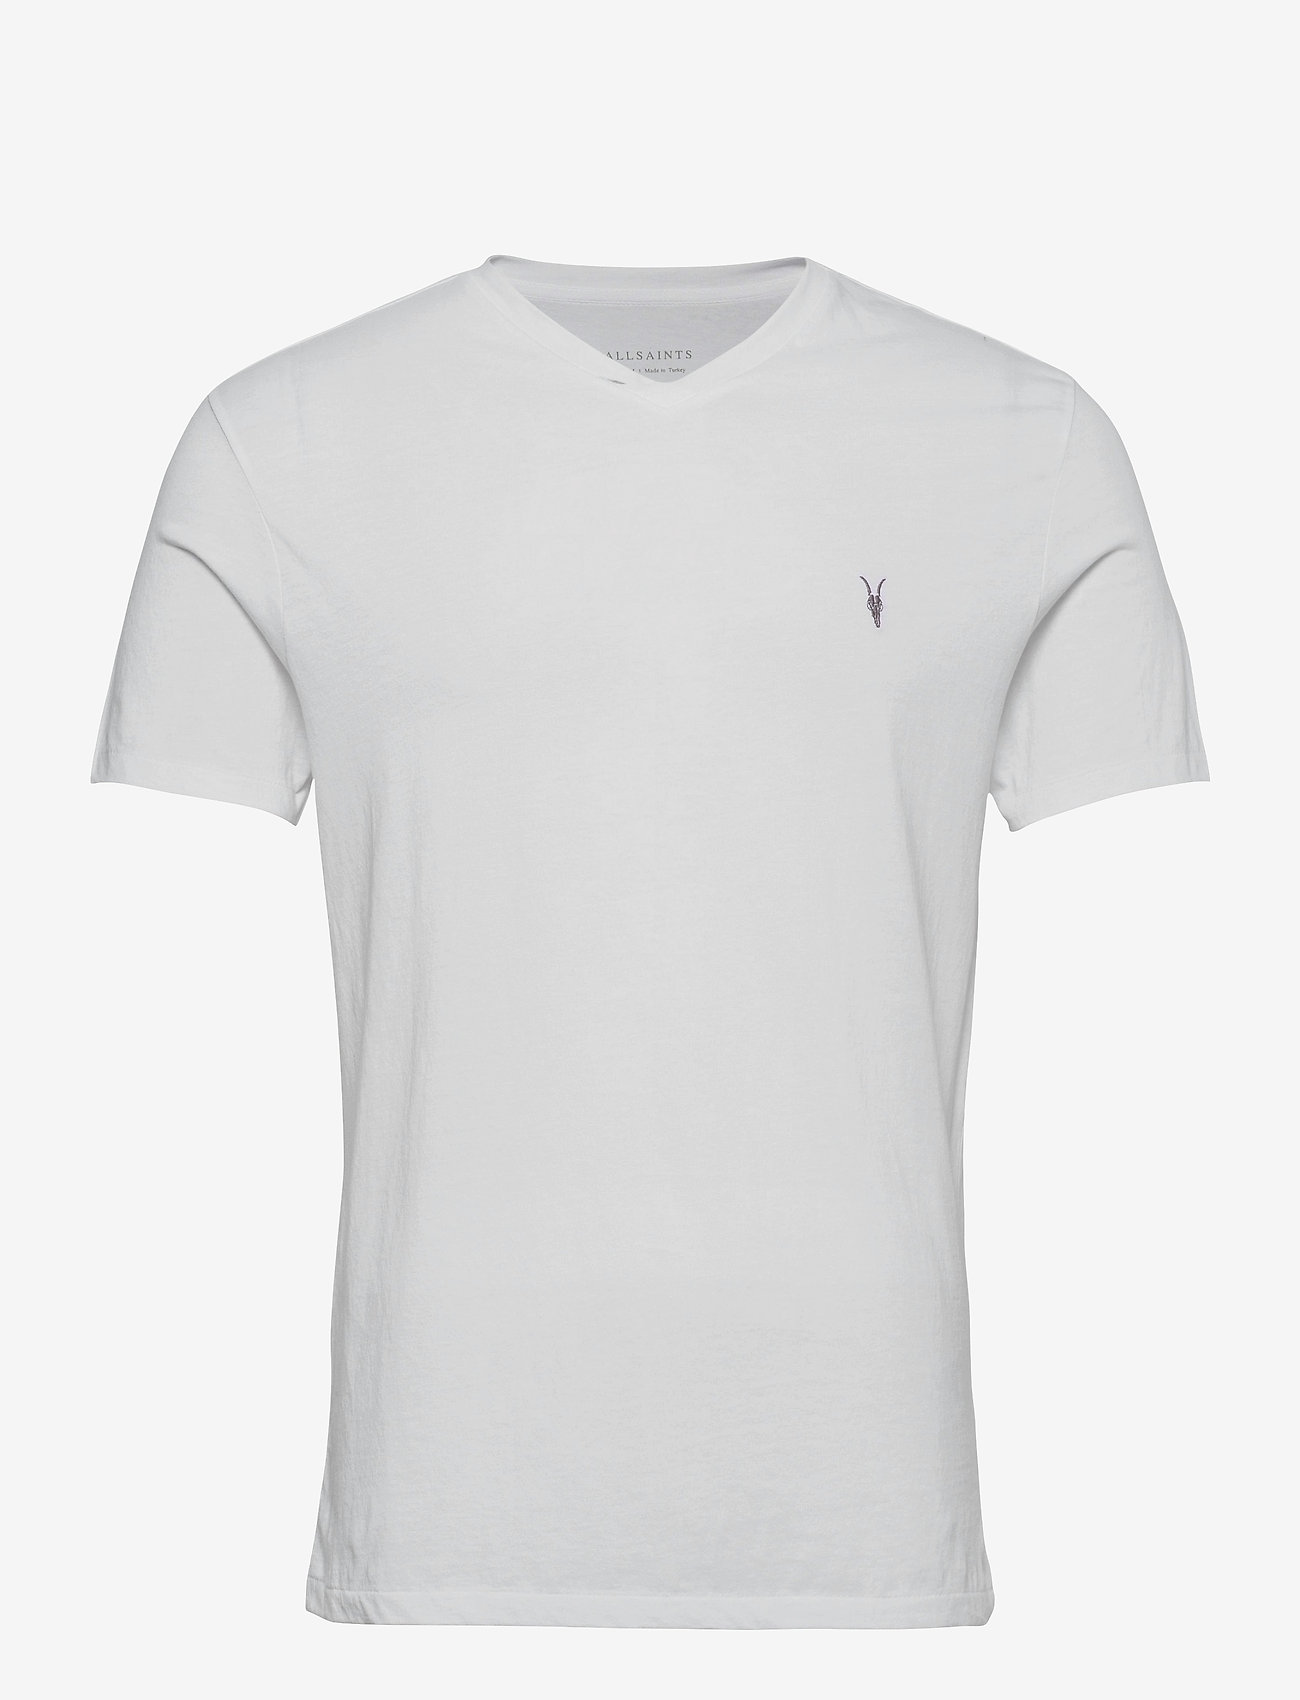 AllSaints - TONIC V-NECK - basic t-shirts - optic white - 0